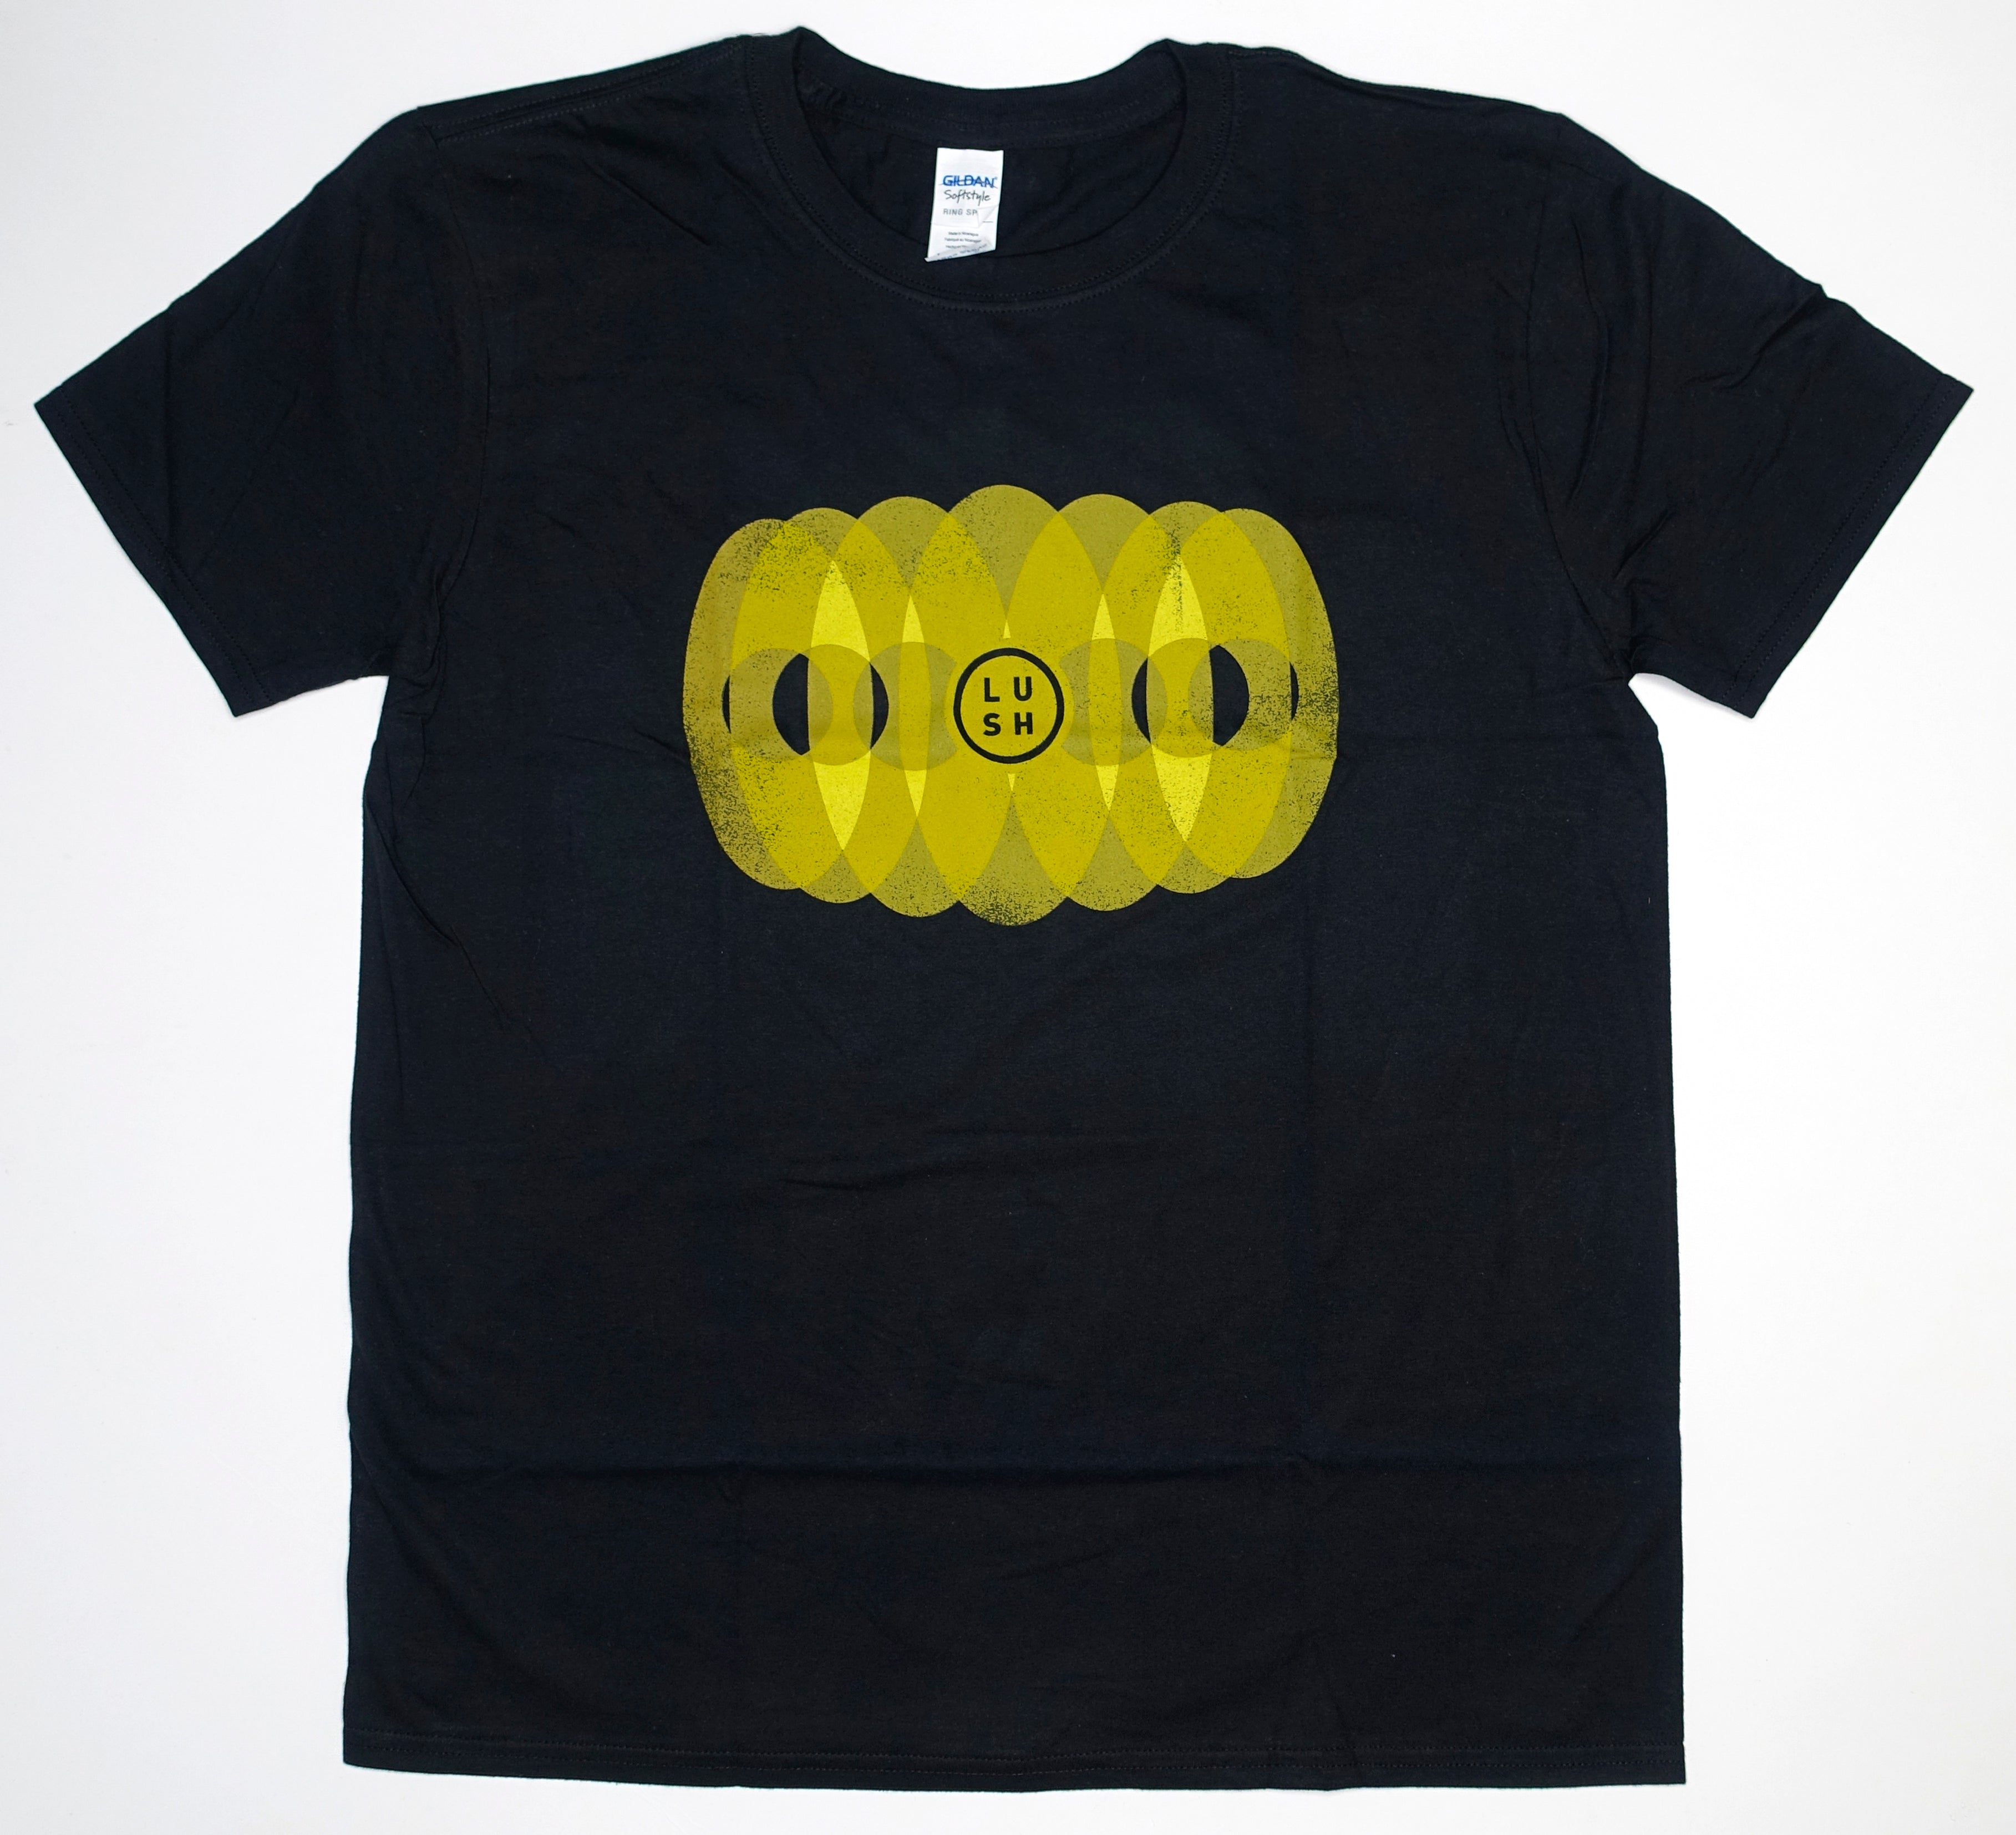 Lush - Yellow Circles 2016 Tour Shirt Size Large